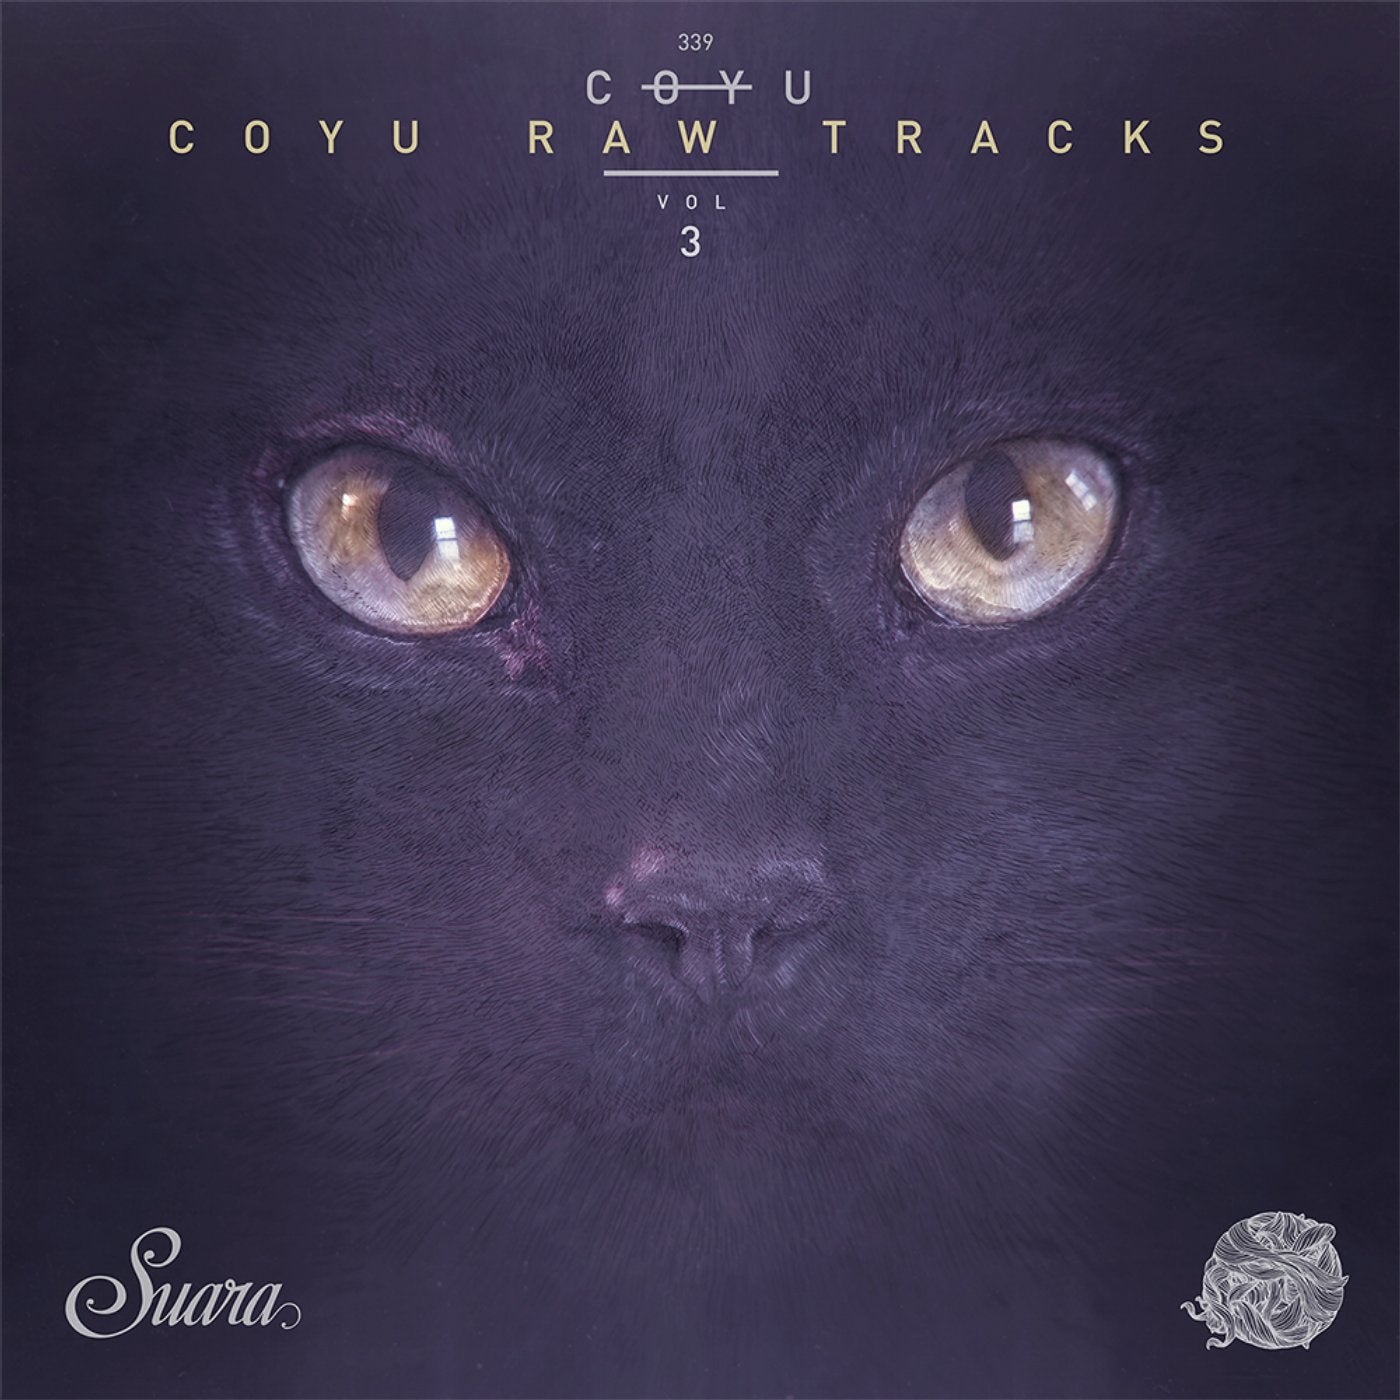 Coyu Raw Tracks Vol. 3